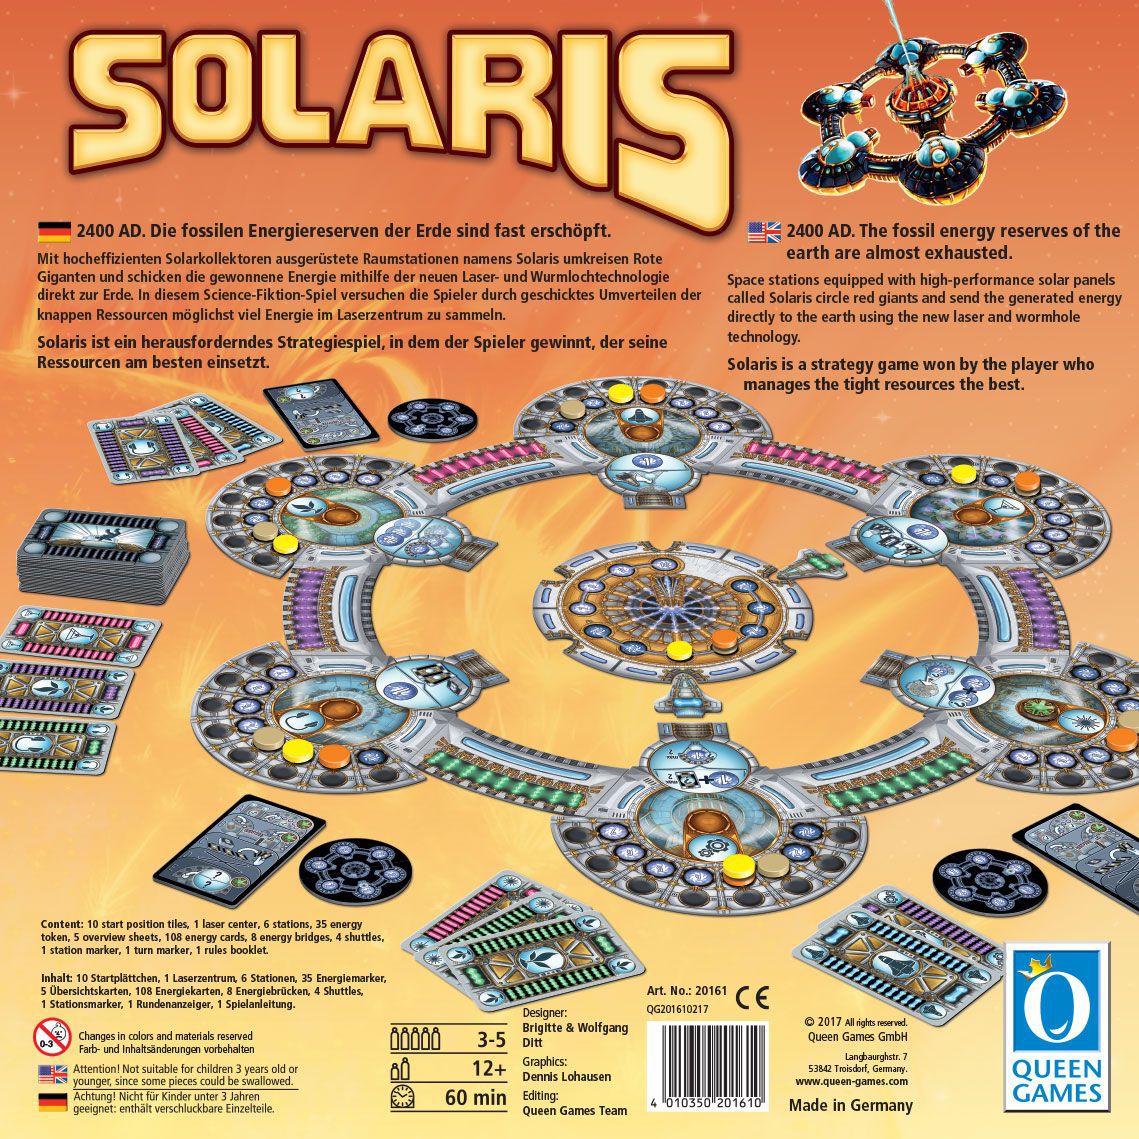 Solaris | The CG Realm